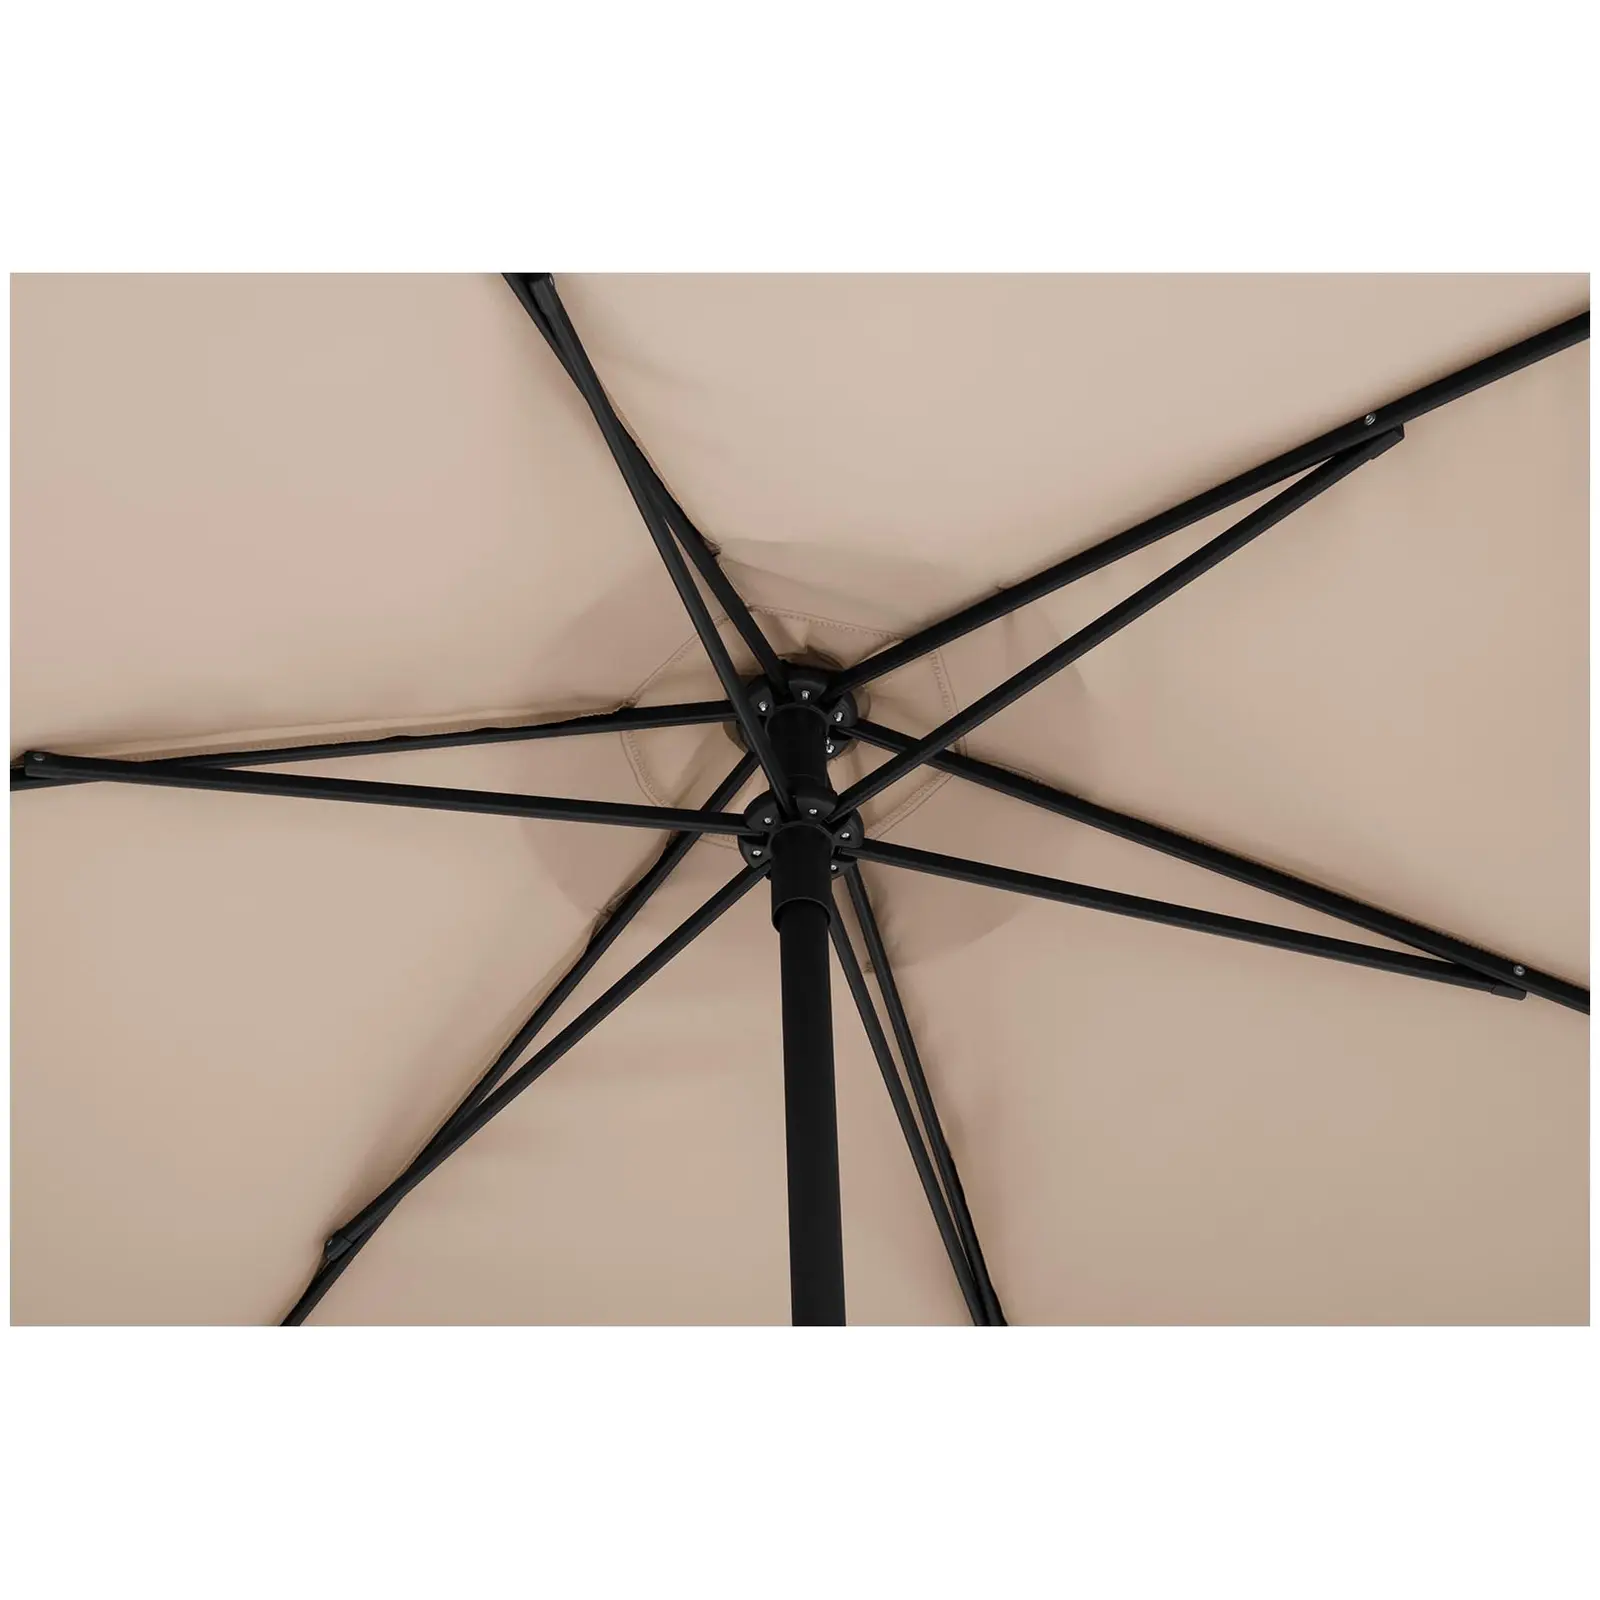 Parasol - Cream - sekskantet - 270 cm i diameter